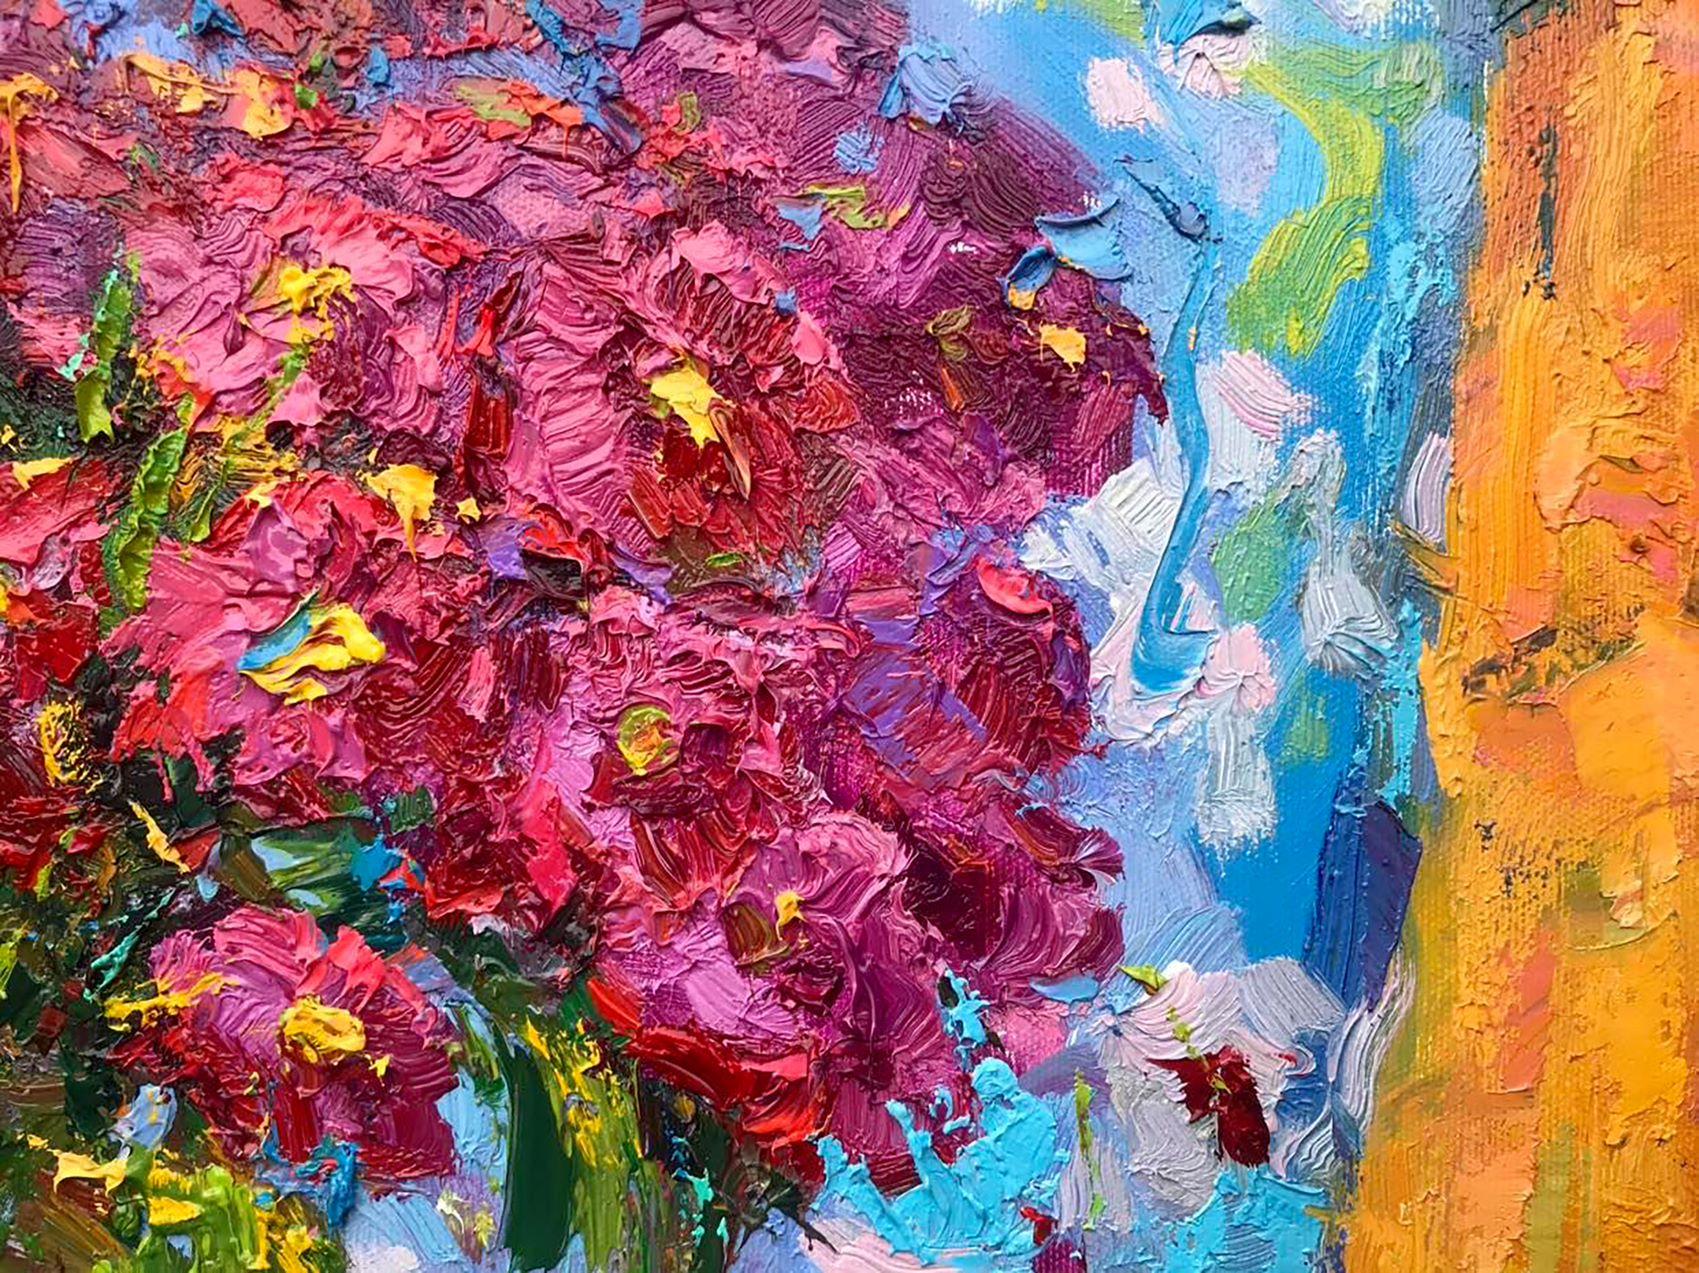 Artist: Oksana Kalenyuk 
Work: Original oil painting, handmade artwork, one of a kind 
Medium: Oil on canvas 
Year: 2021
Style: Impressionism
Title: Chrysanthemum 
Size: 23.5